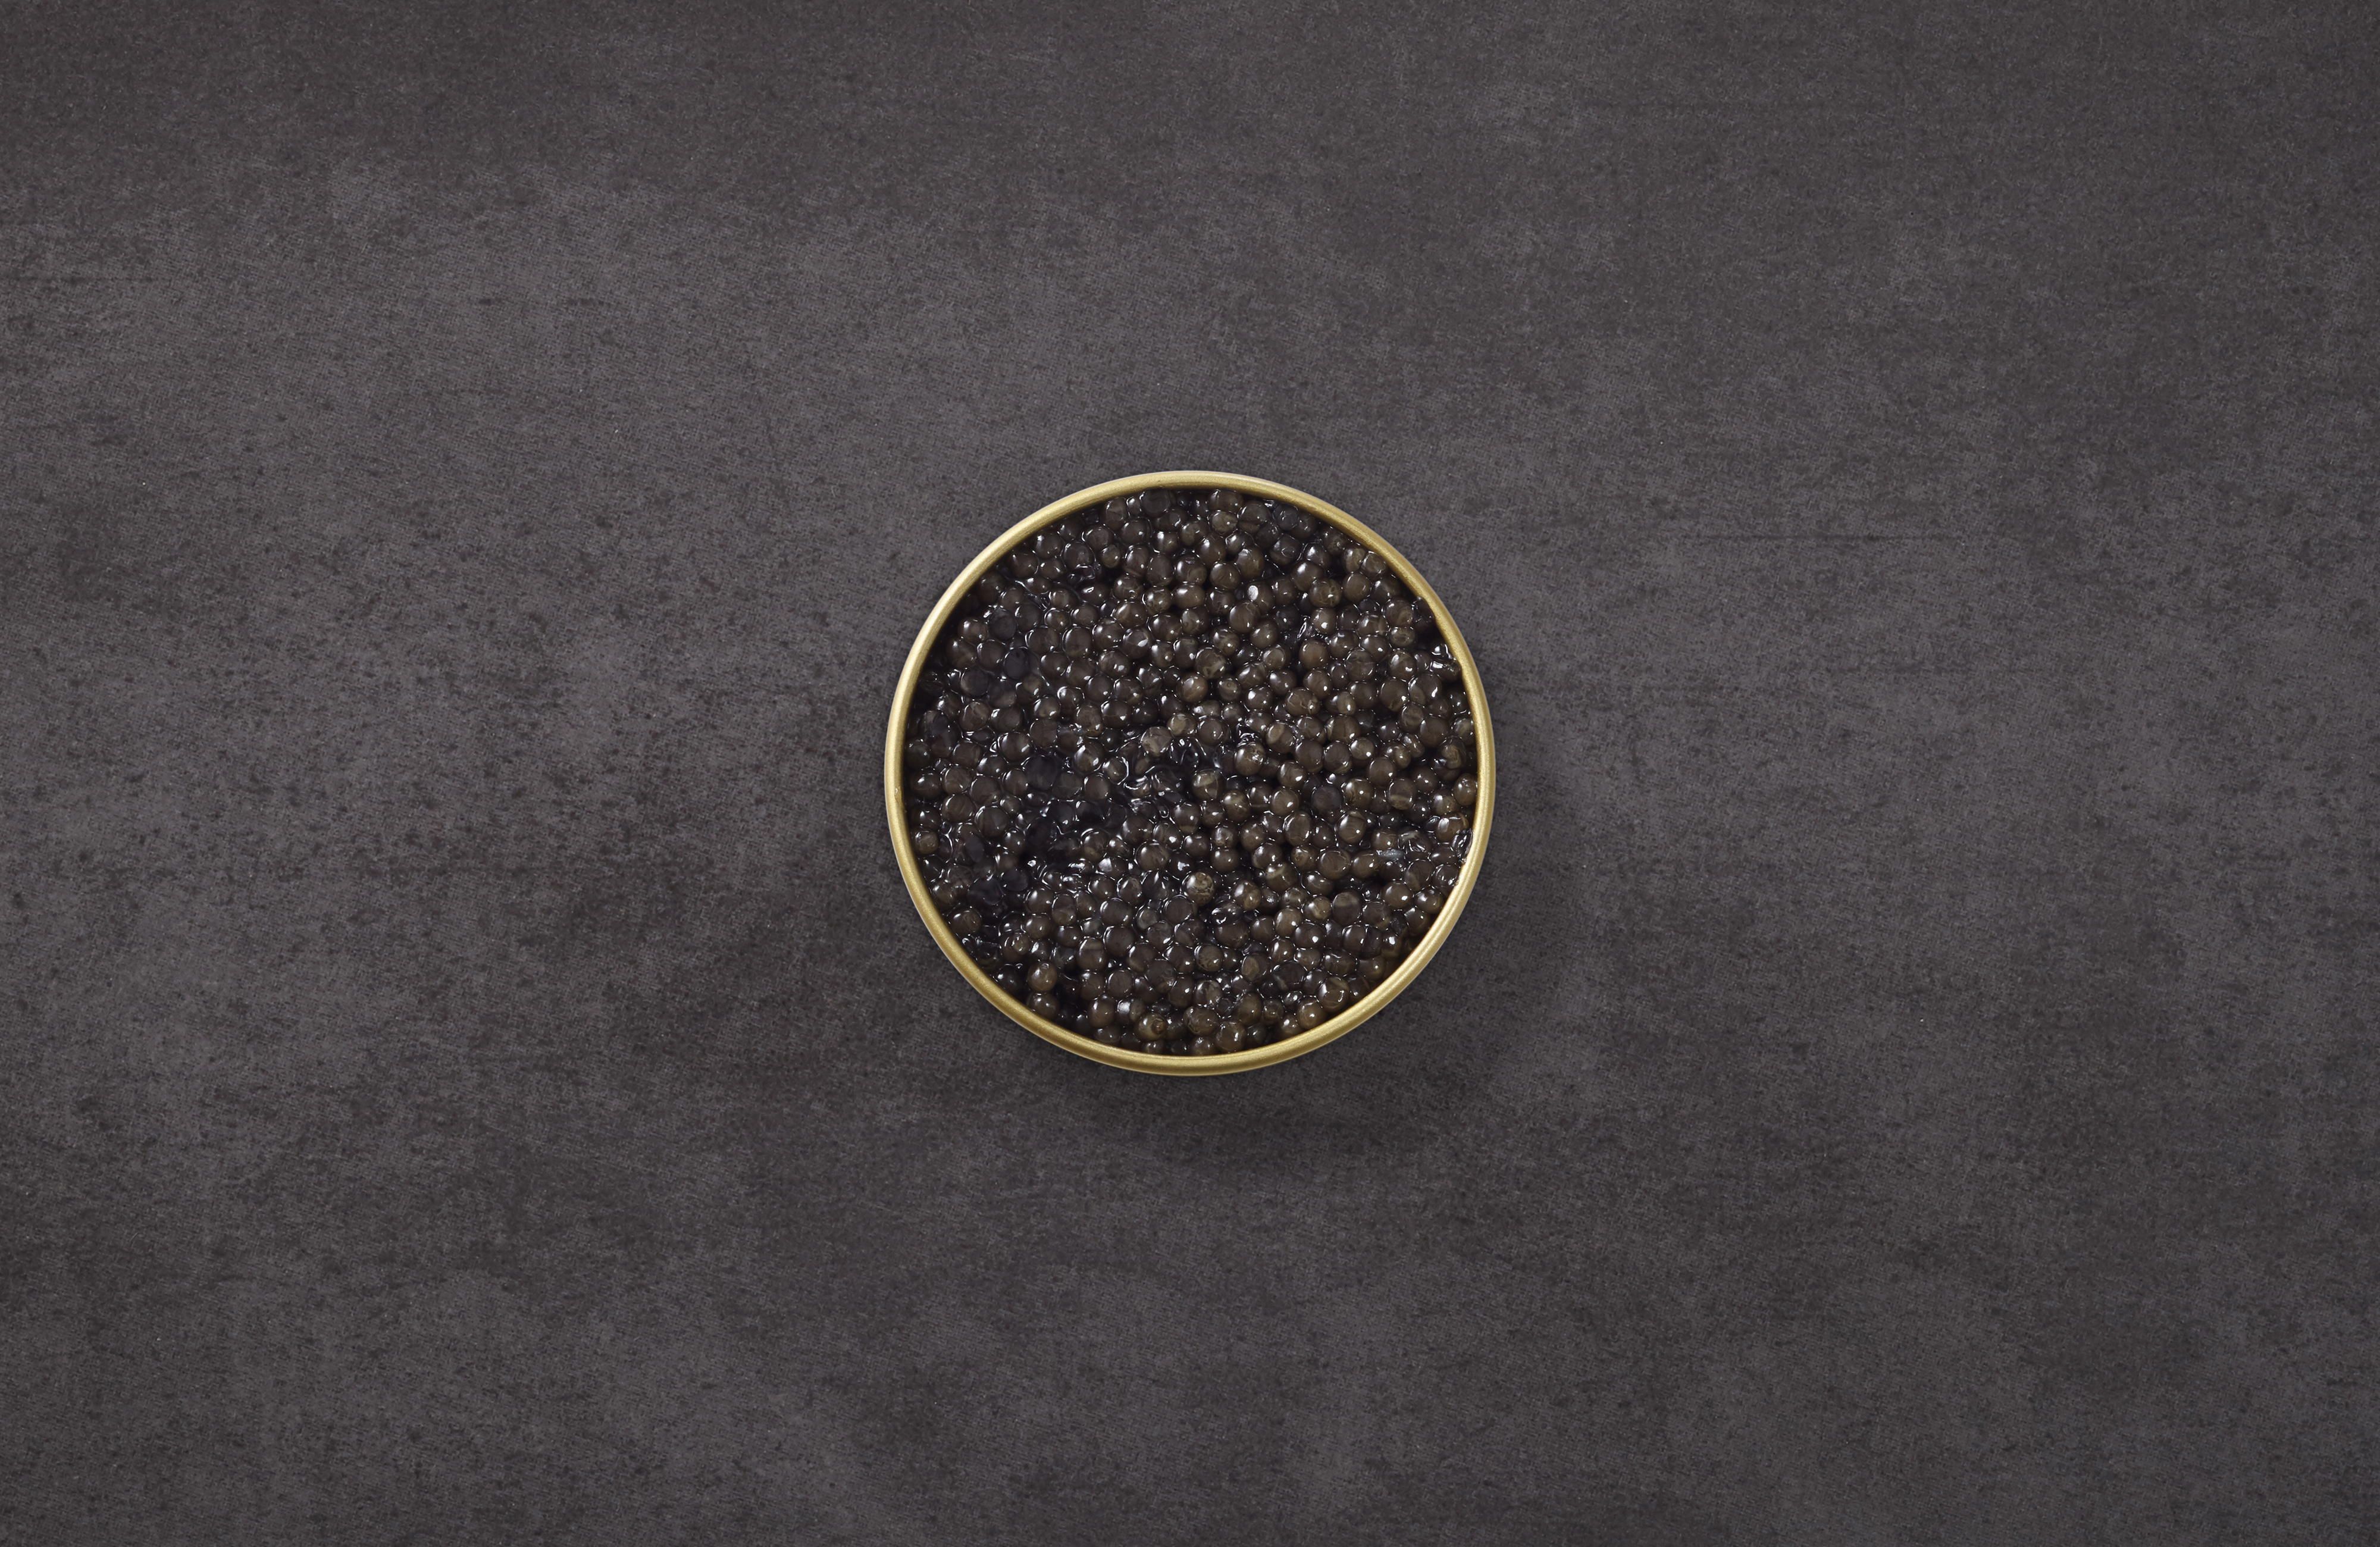 Caviar · Beluga (50g)